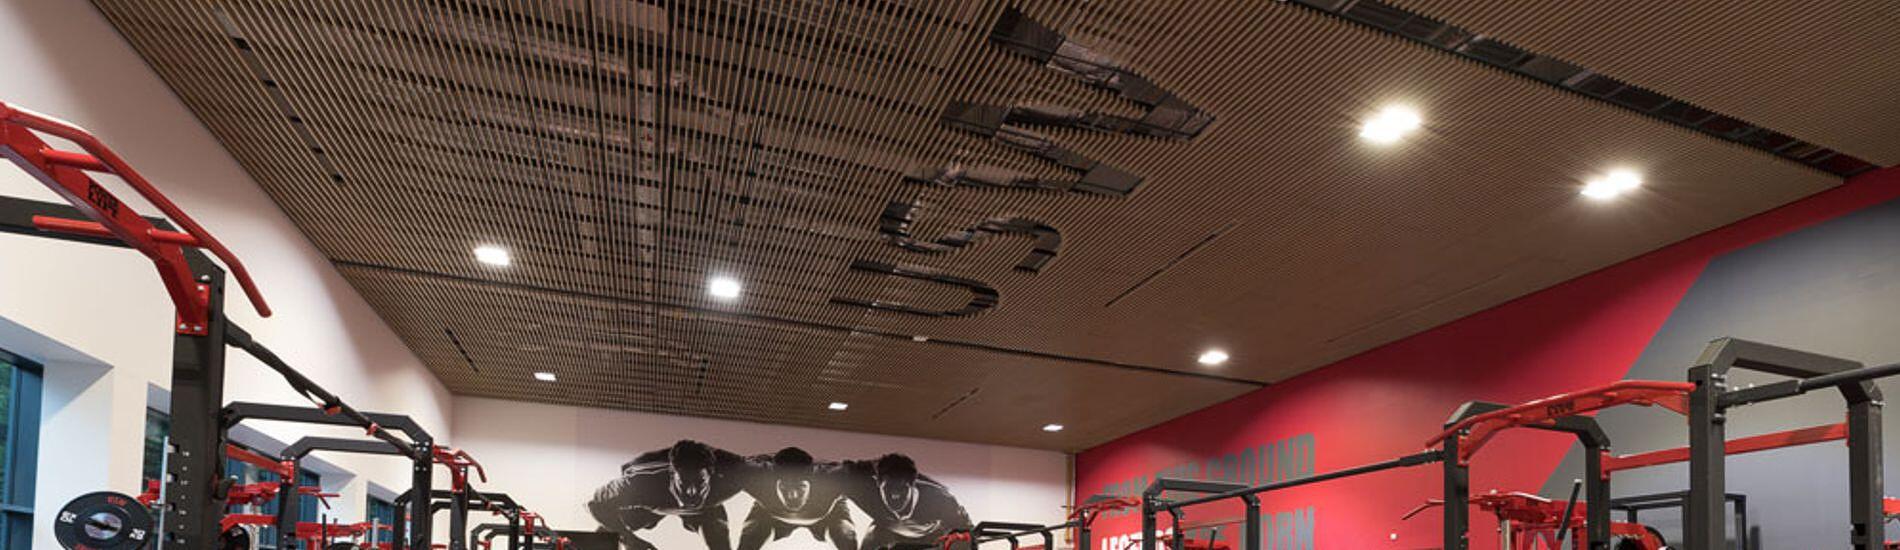 SUPATILE SLAT Ceiling Tiles Incorporate Branding In Gym Ceiling